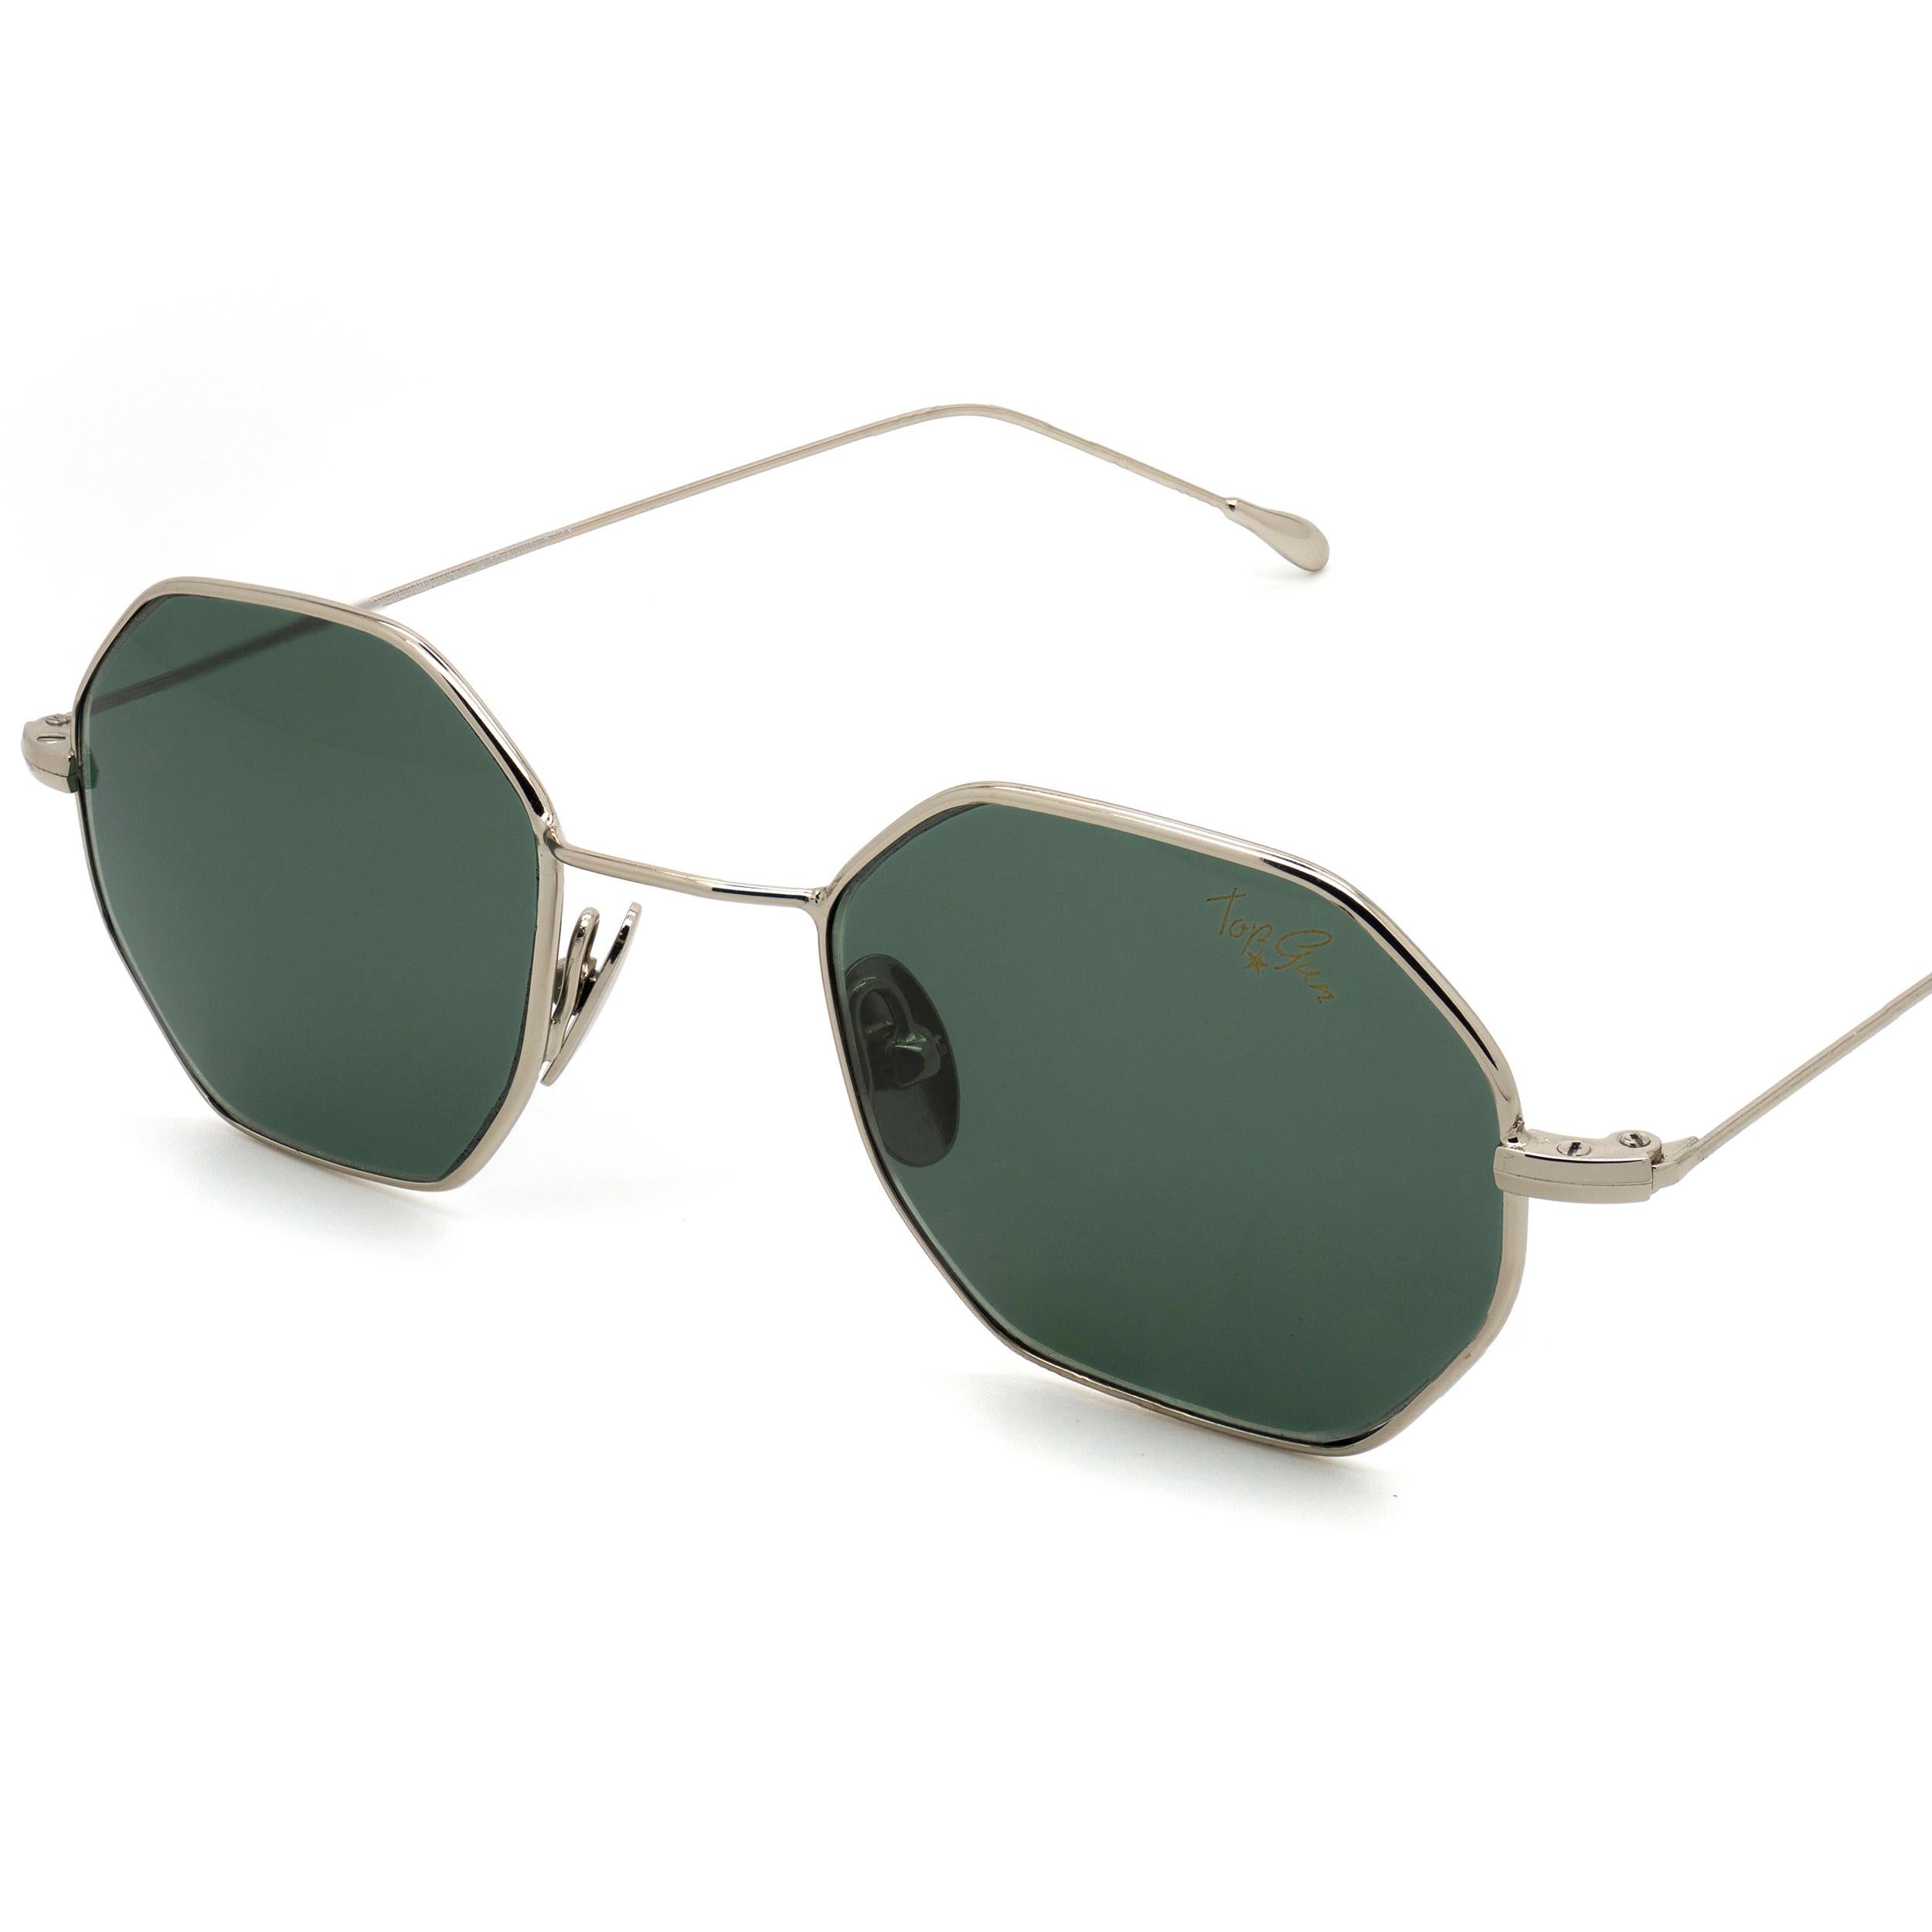 Top Gun hexagonal vintage sunglasses, ITALY 90s In New Condition For Sale In Santa Clarita, CA